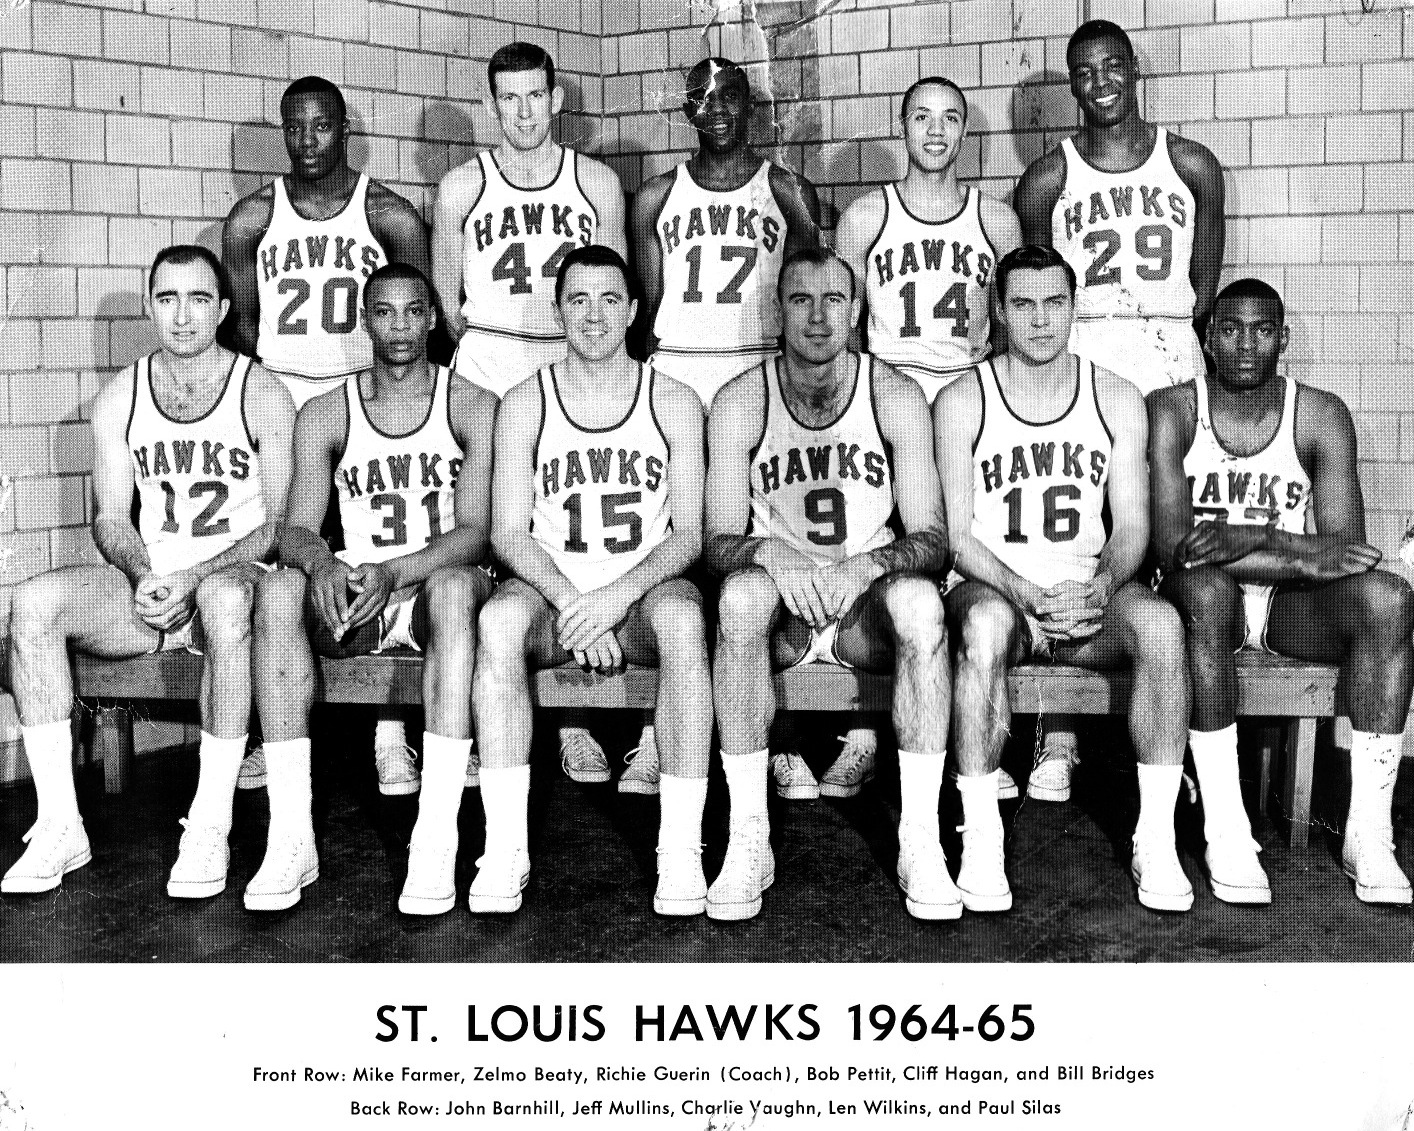 St. Louis Hawks Basketball Club